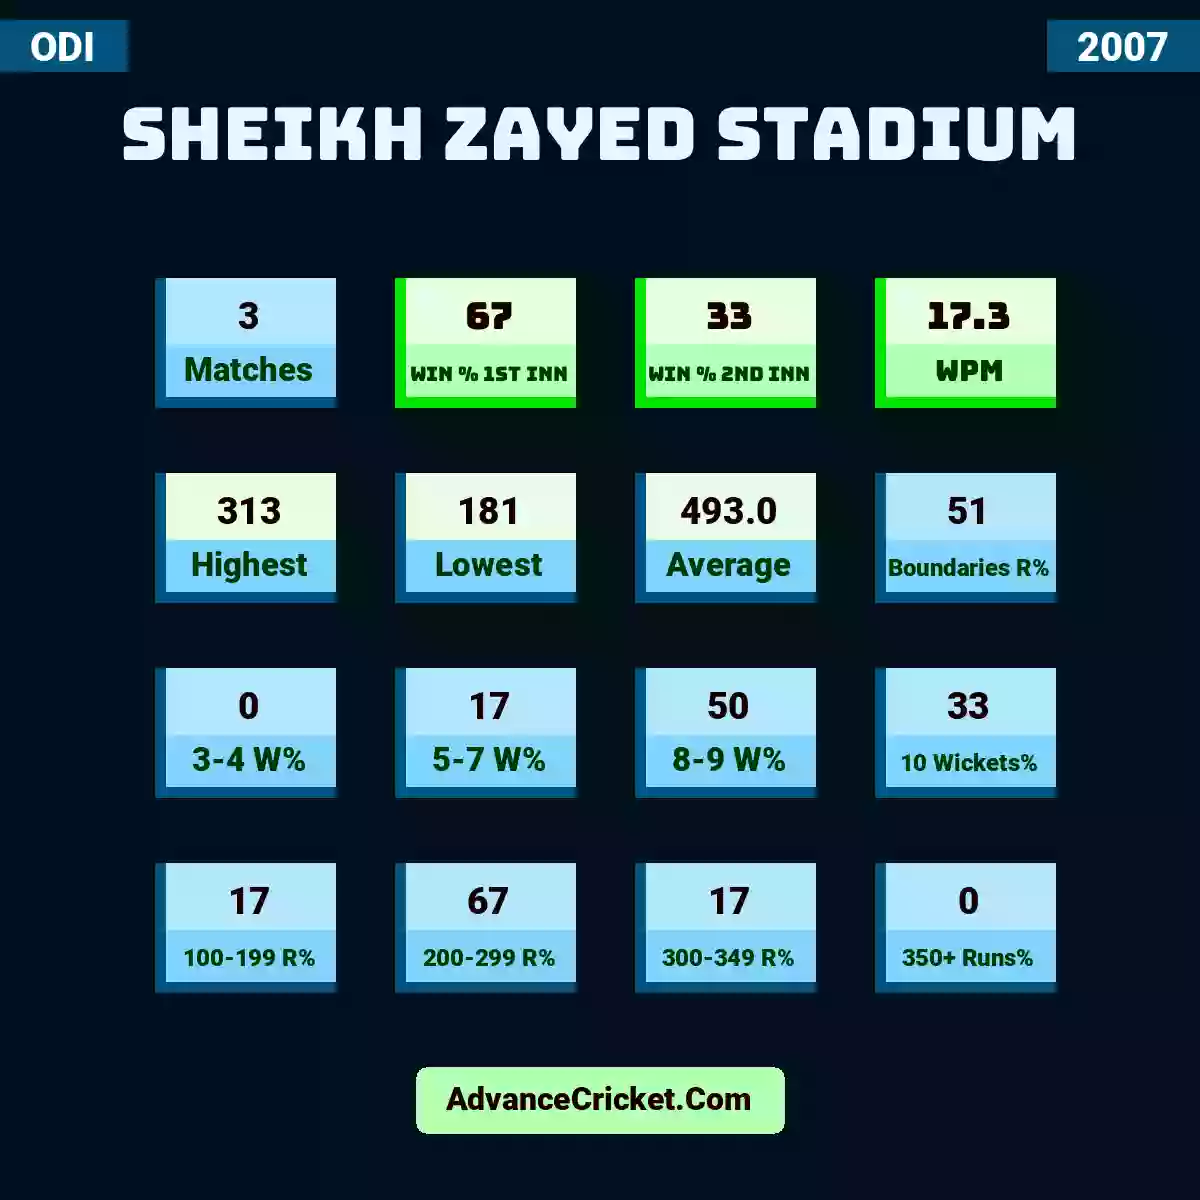 Image showing Sheikh Zayed Stadium with Matches: 3, Win % 1st Inn: 67, Win % 2nd Inn: 33, WPM: 17.3, Highest: 313, Lowest: 181, Average: 493.0, Boundaries R%: 51, 3-4 W%: 0, 5-7 W%: 17, 8-9 W%: 50, 10 Wickets%: 33, 100-199 R%: 17, 200-299 R%: 67, 300-349 R%: 17, 350+ Runs%: 0.